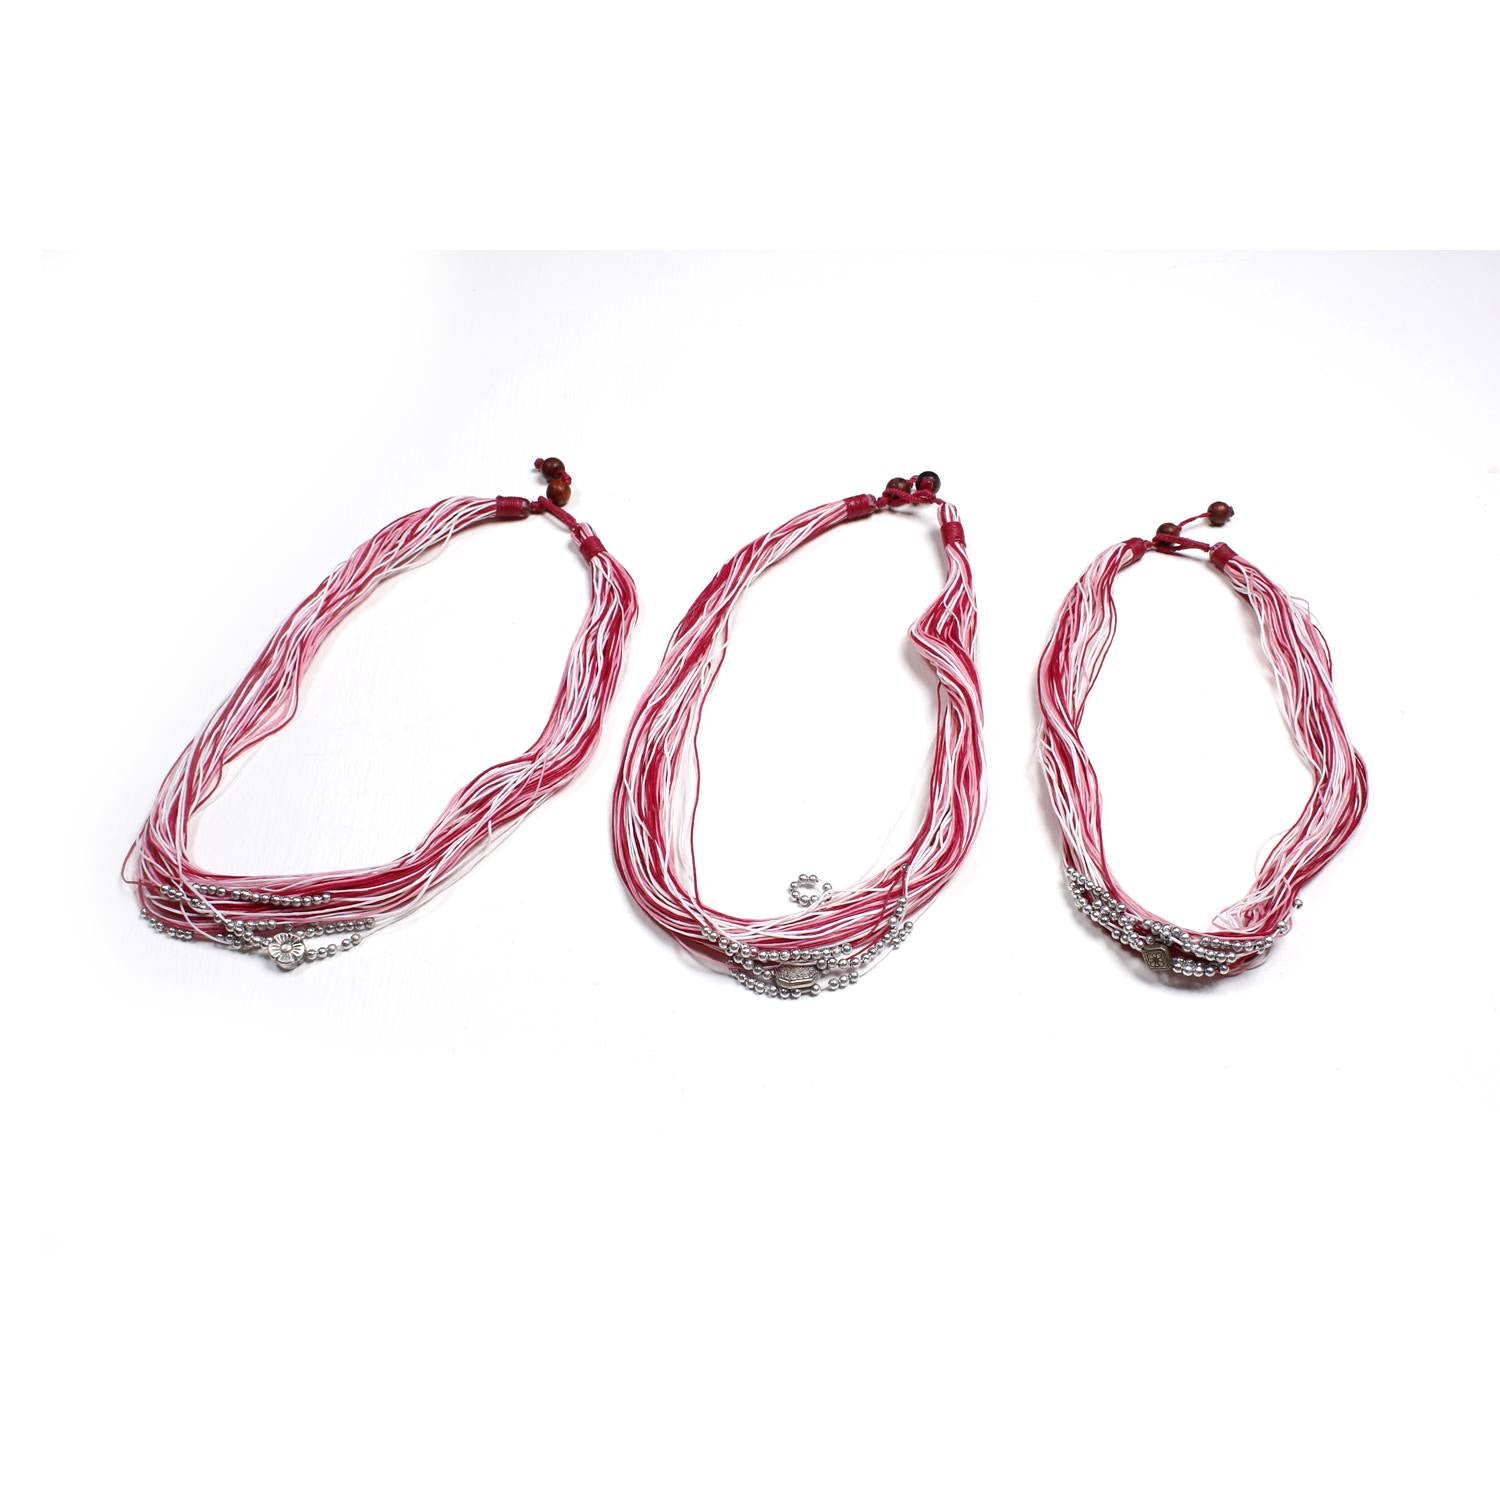 BUNDLE: Cotton Waxed String Necklace 4 & 3 Pieces - Thailand